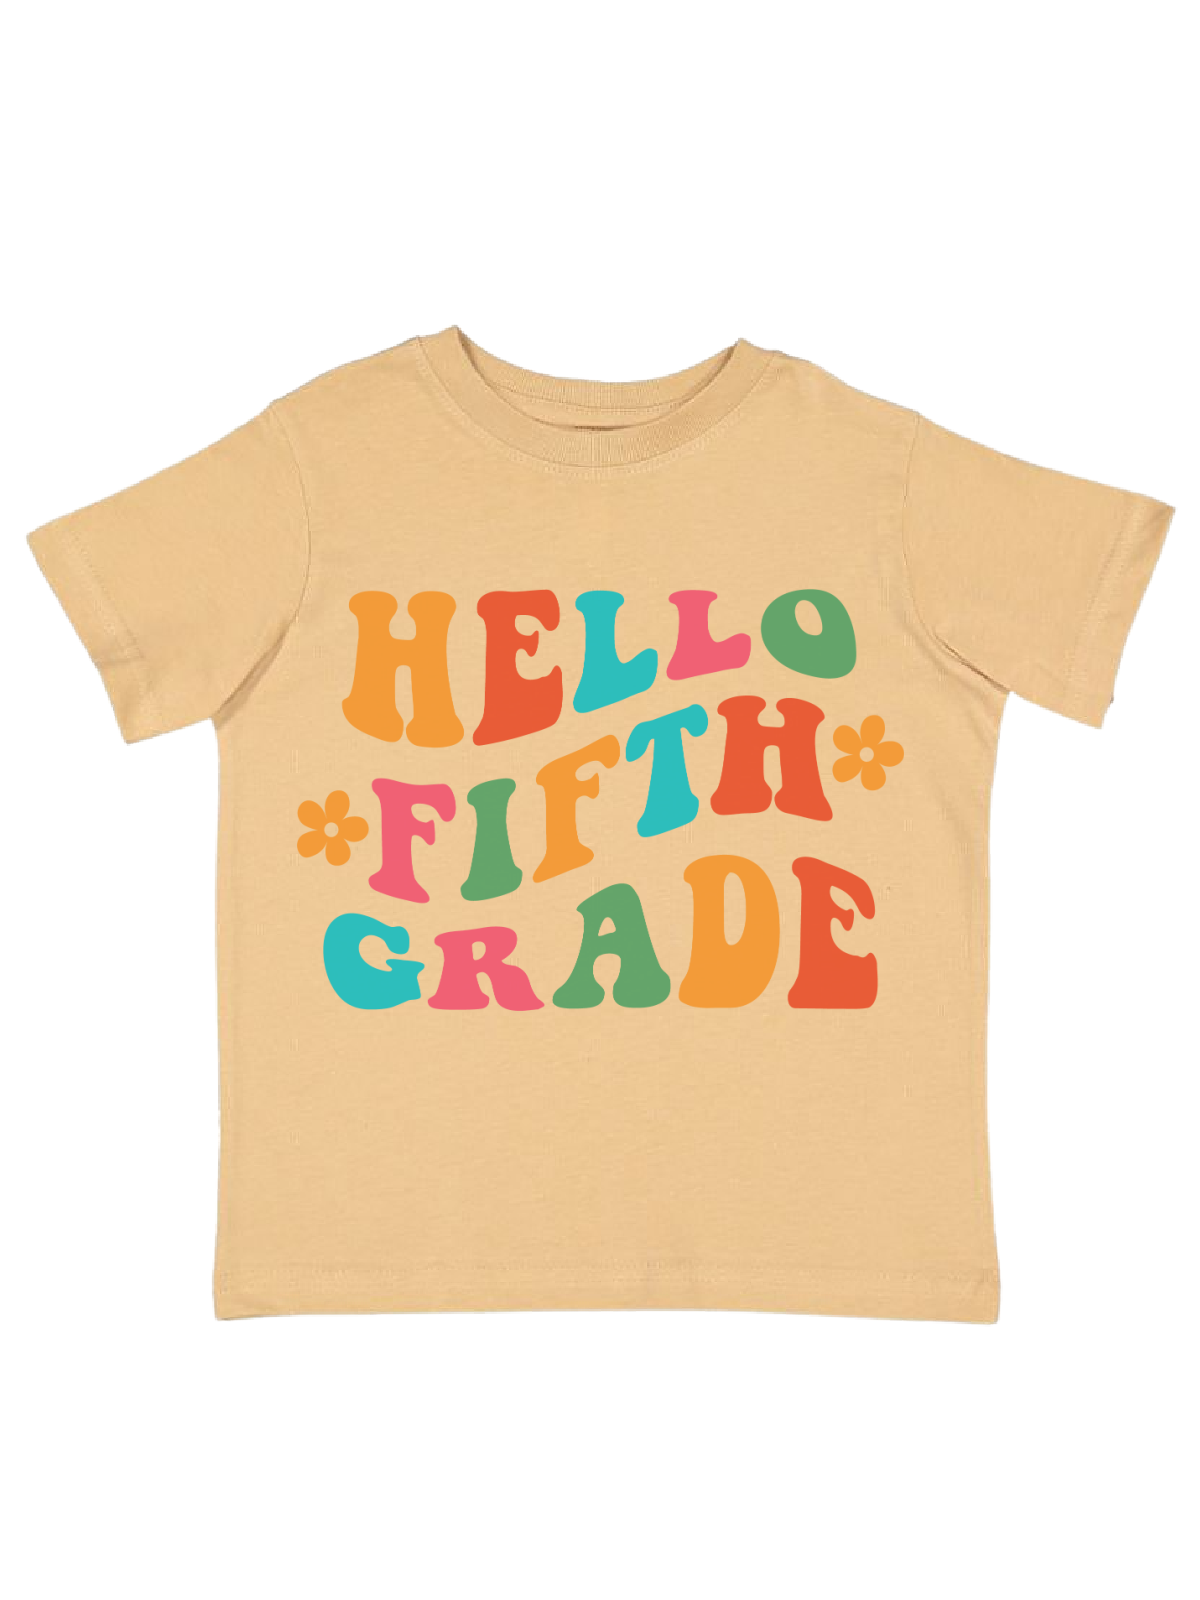 Hello Fifth Grade Kids Back to School Retro Shirt in Na Latee